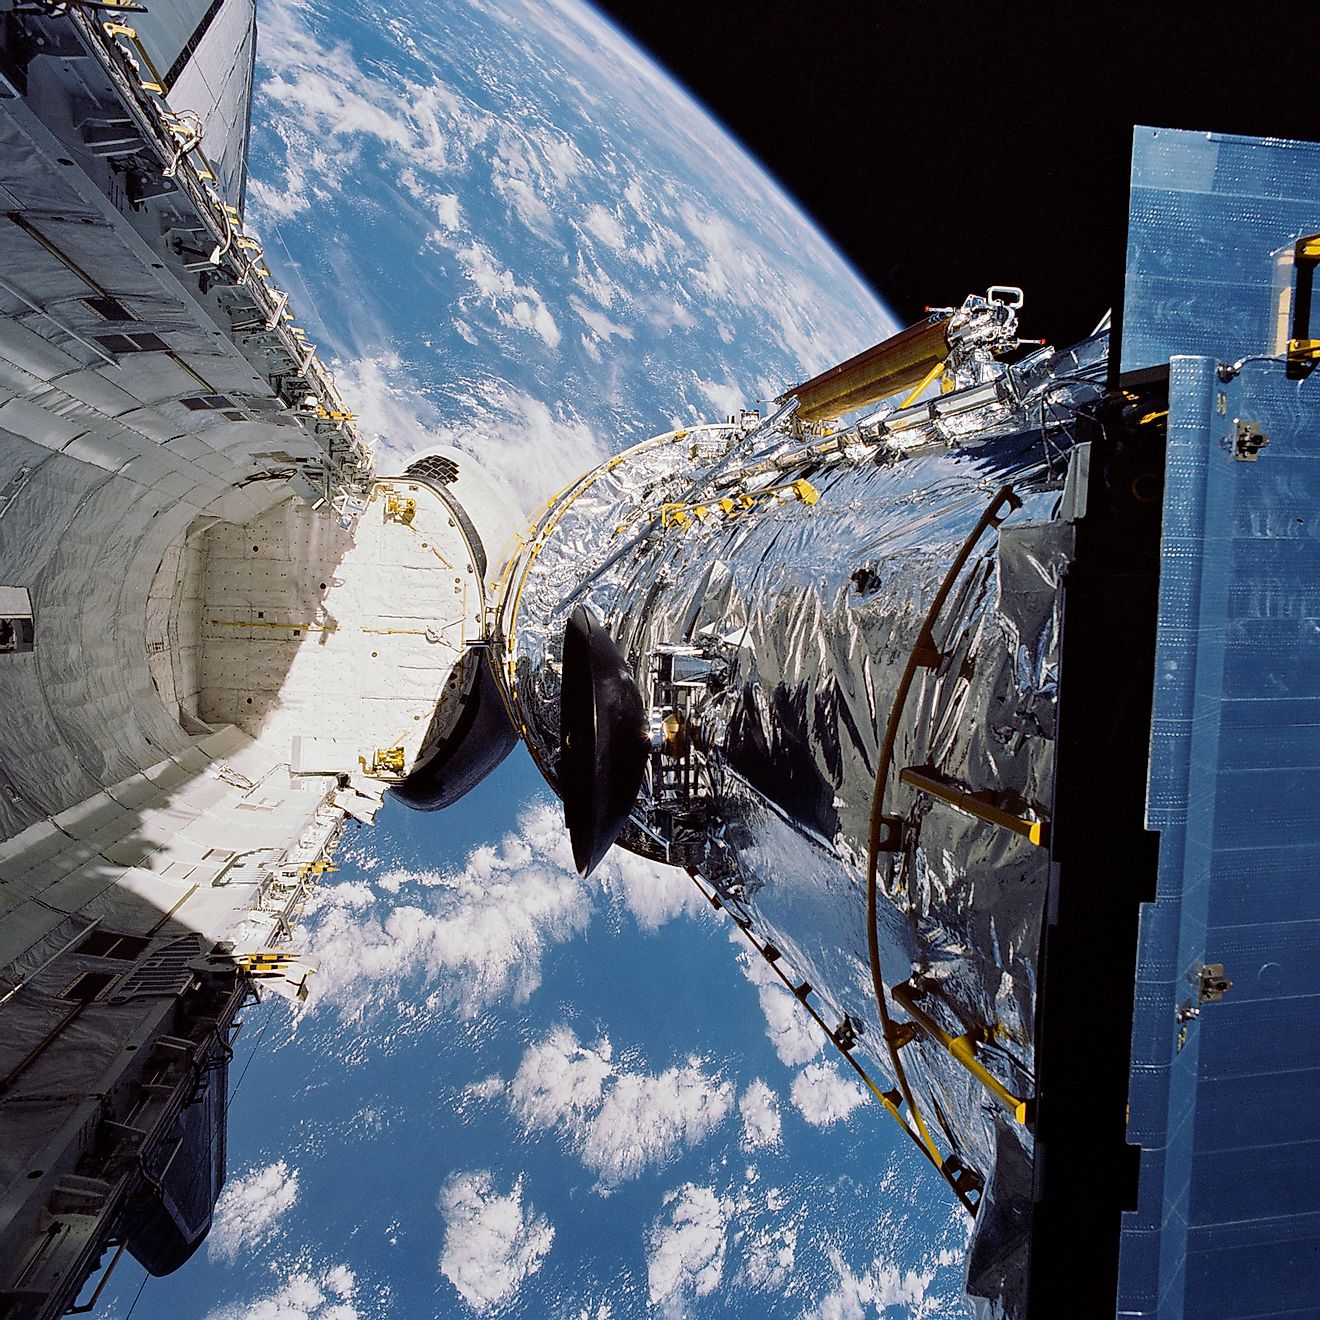 April 25, 1990: Deployment of the Hubble Space Telescope. Image credit: pio3 / Shutterstock.com